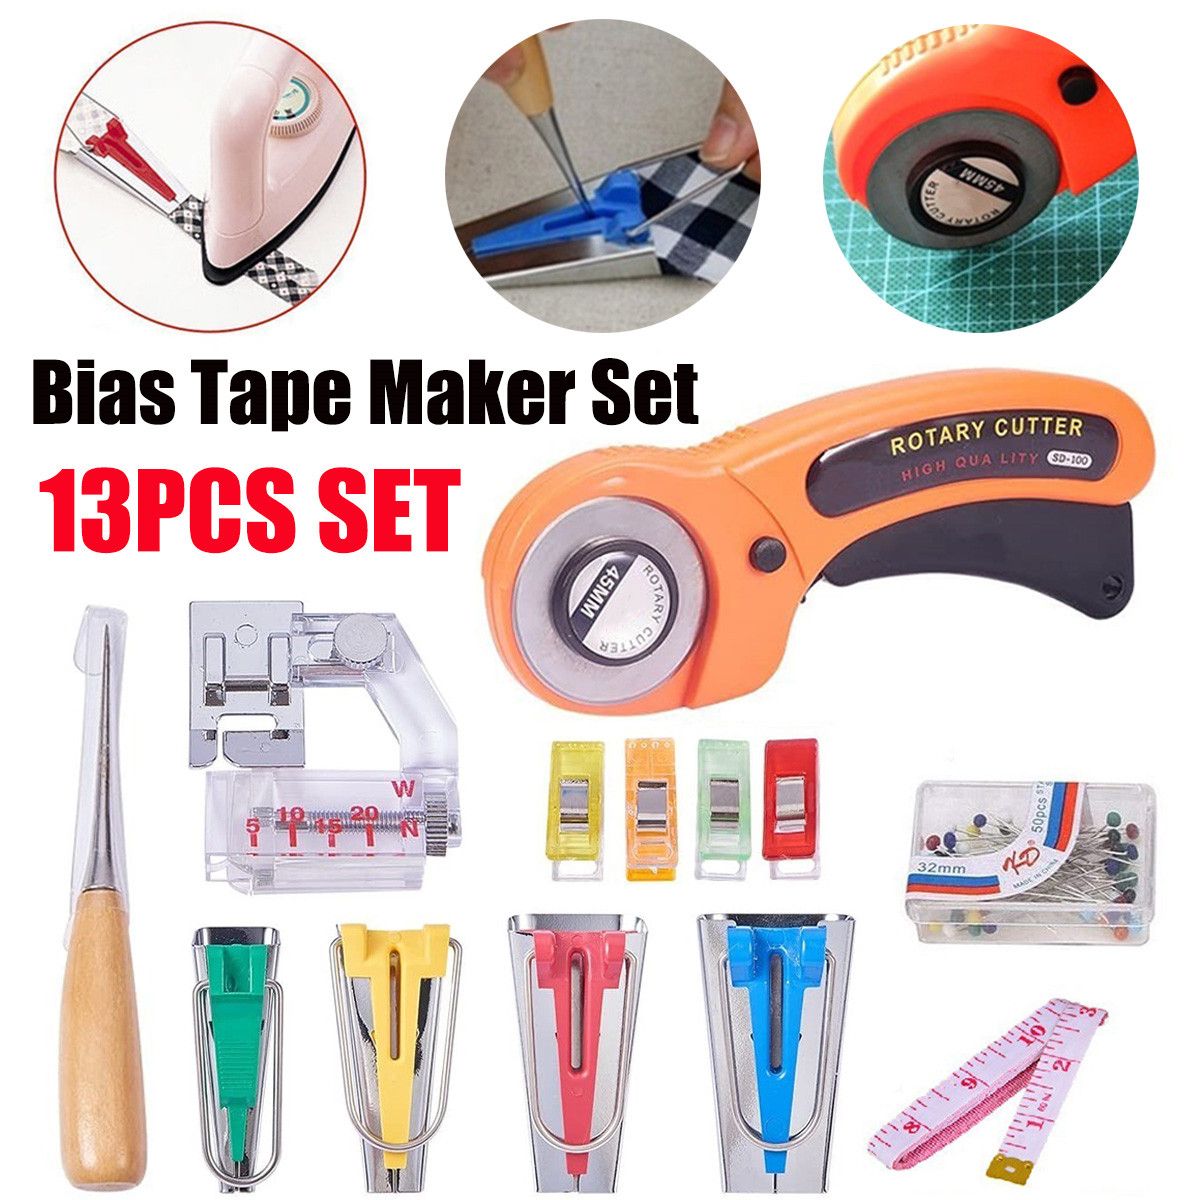 13Pcs-Fusible-Bias-Binding-Tape-Maker-Sewing-Quilting-Awl-Binder-Foot-Tools-Kit-1701249